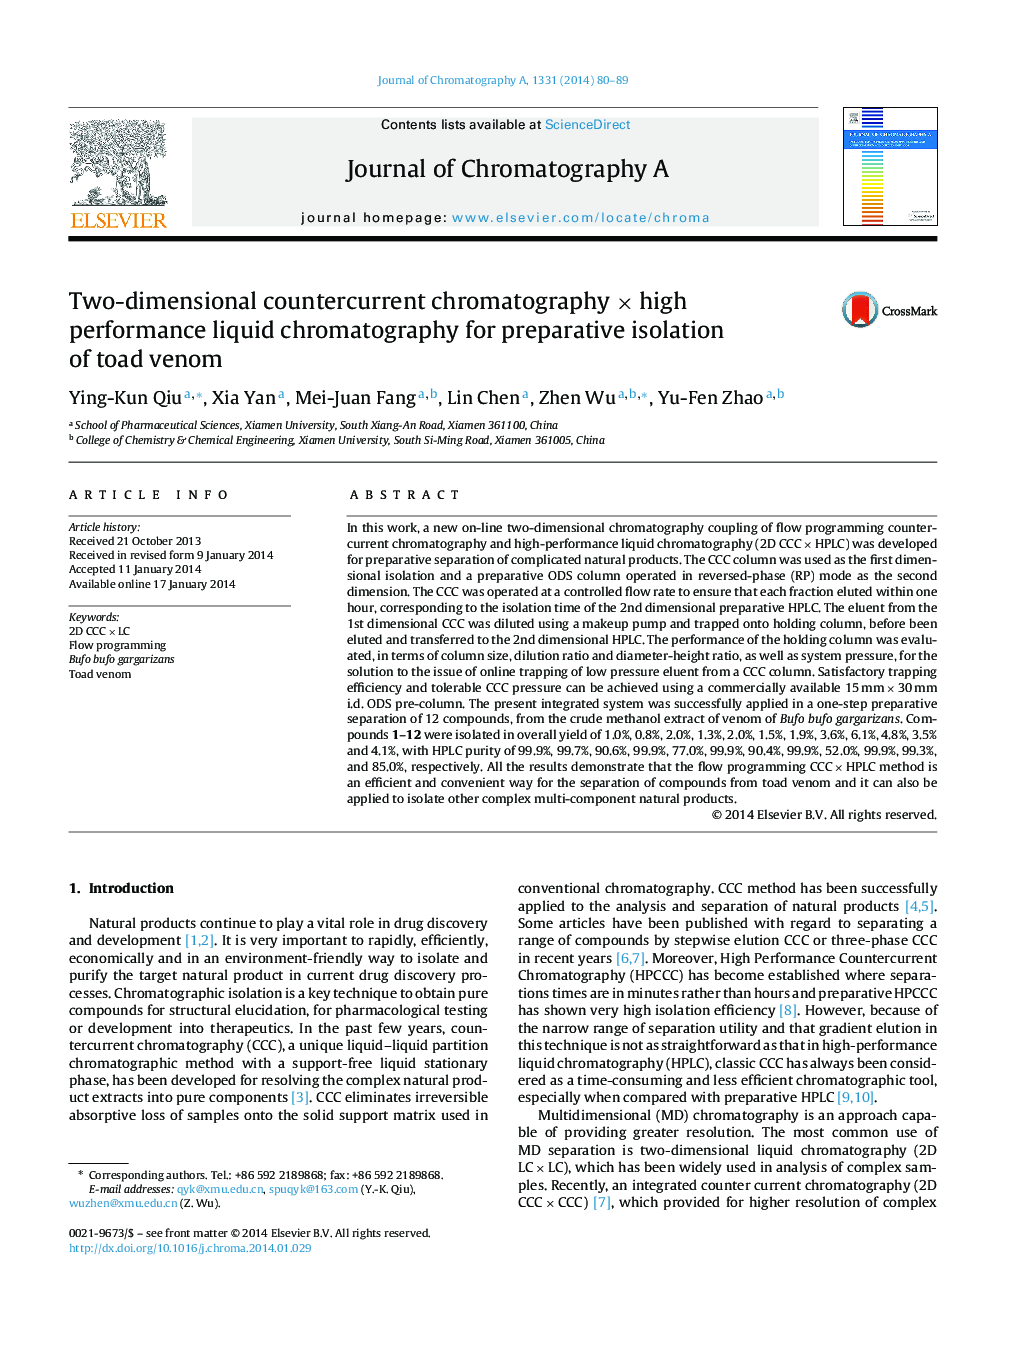 Two-dimensional countercurrent chromatography Ã high performance liquid chromatography for preparative isolation of toad venom